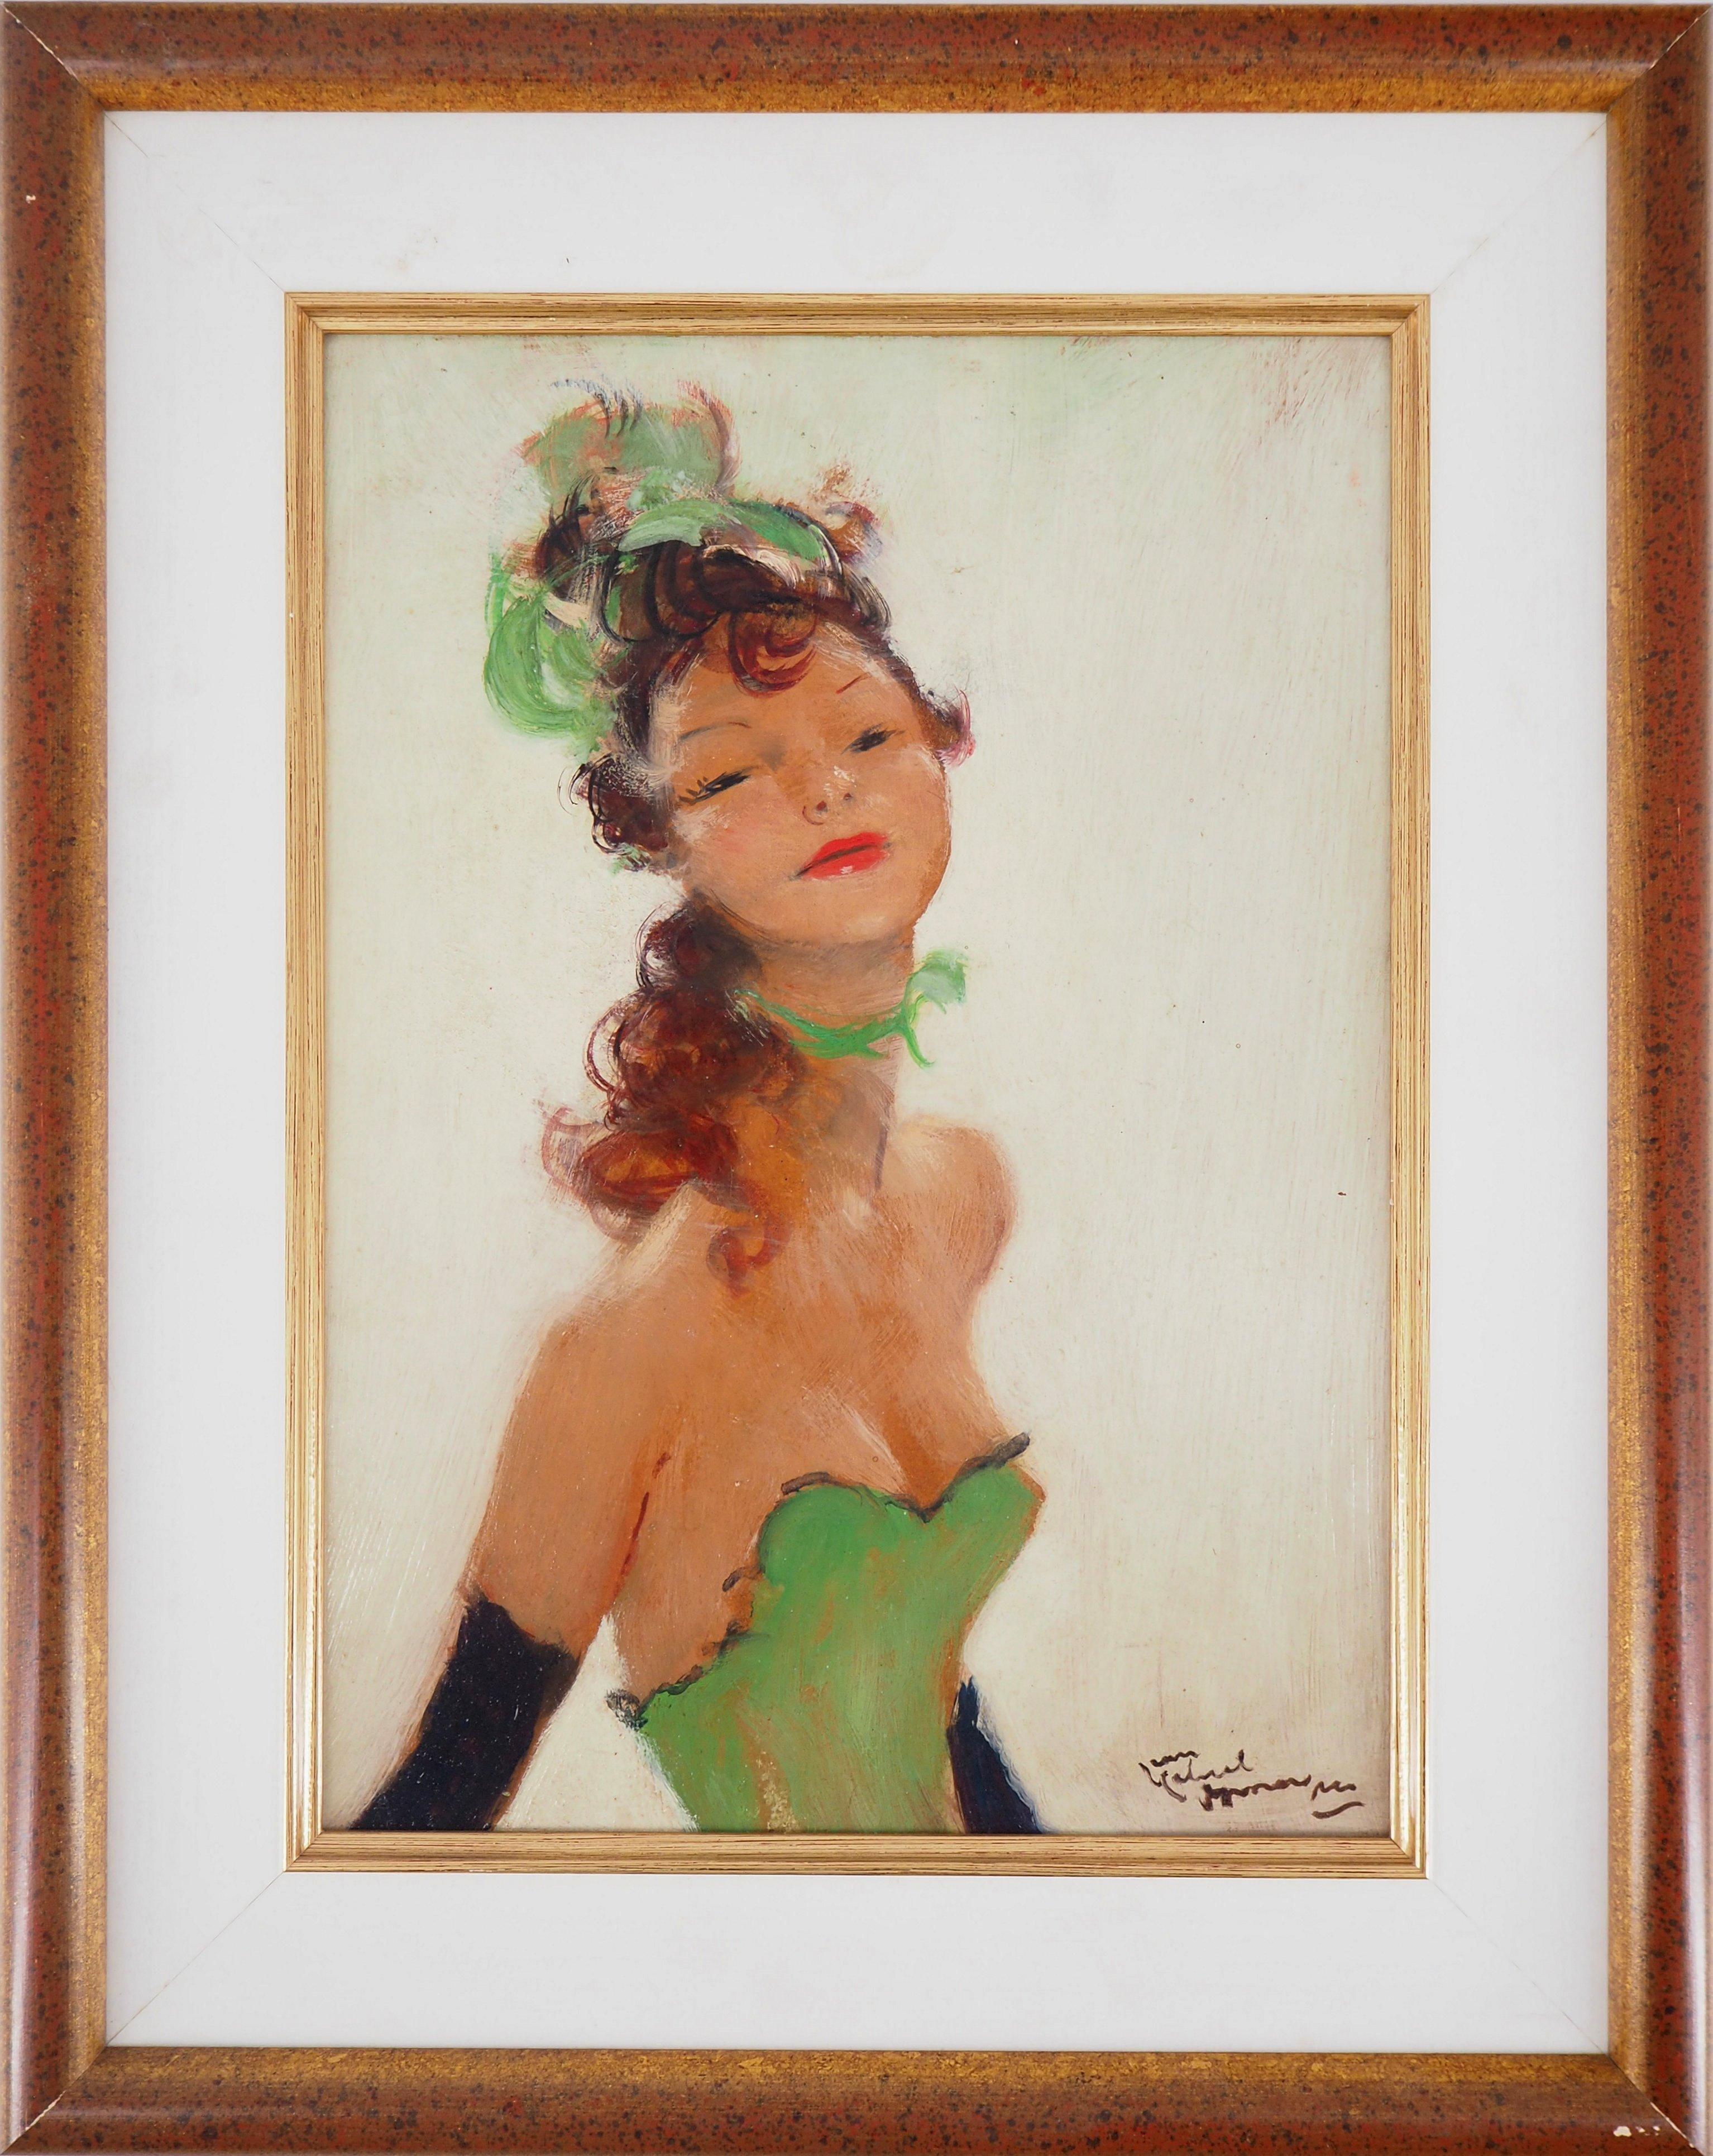 Jean-Gabriel Domergue Portrait Painting - Damsel in Green - Original Oil on Panel, Handsigned 